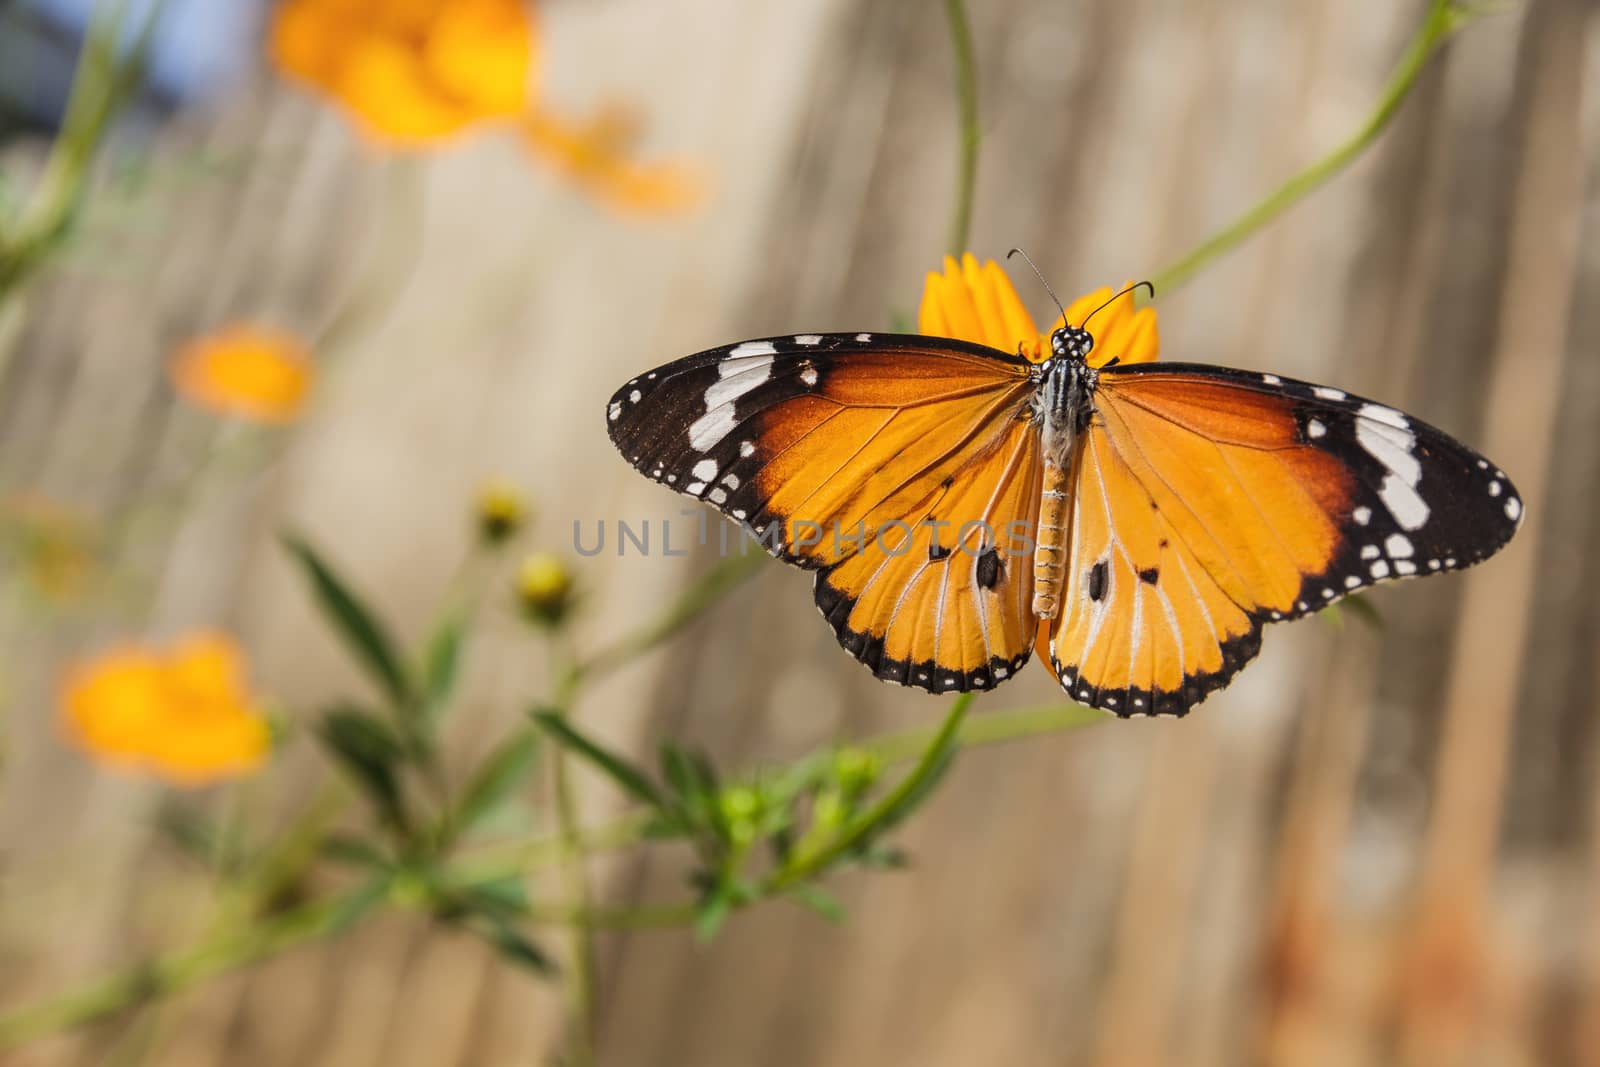 Common Tiger Butterfly (Danaus genutia) in Thailand